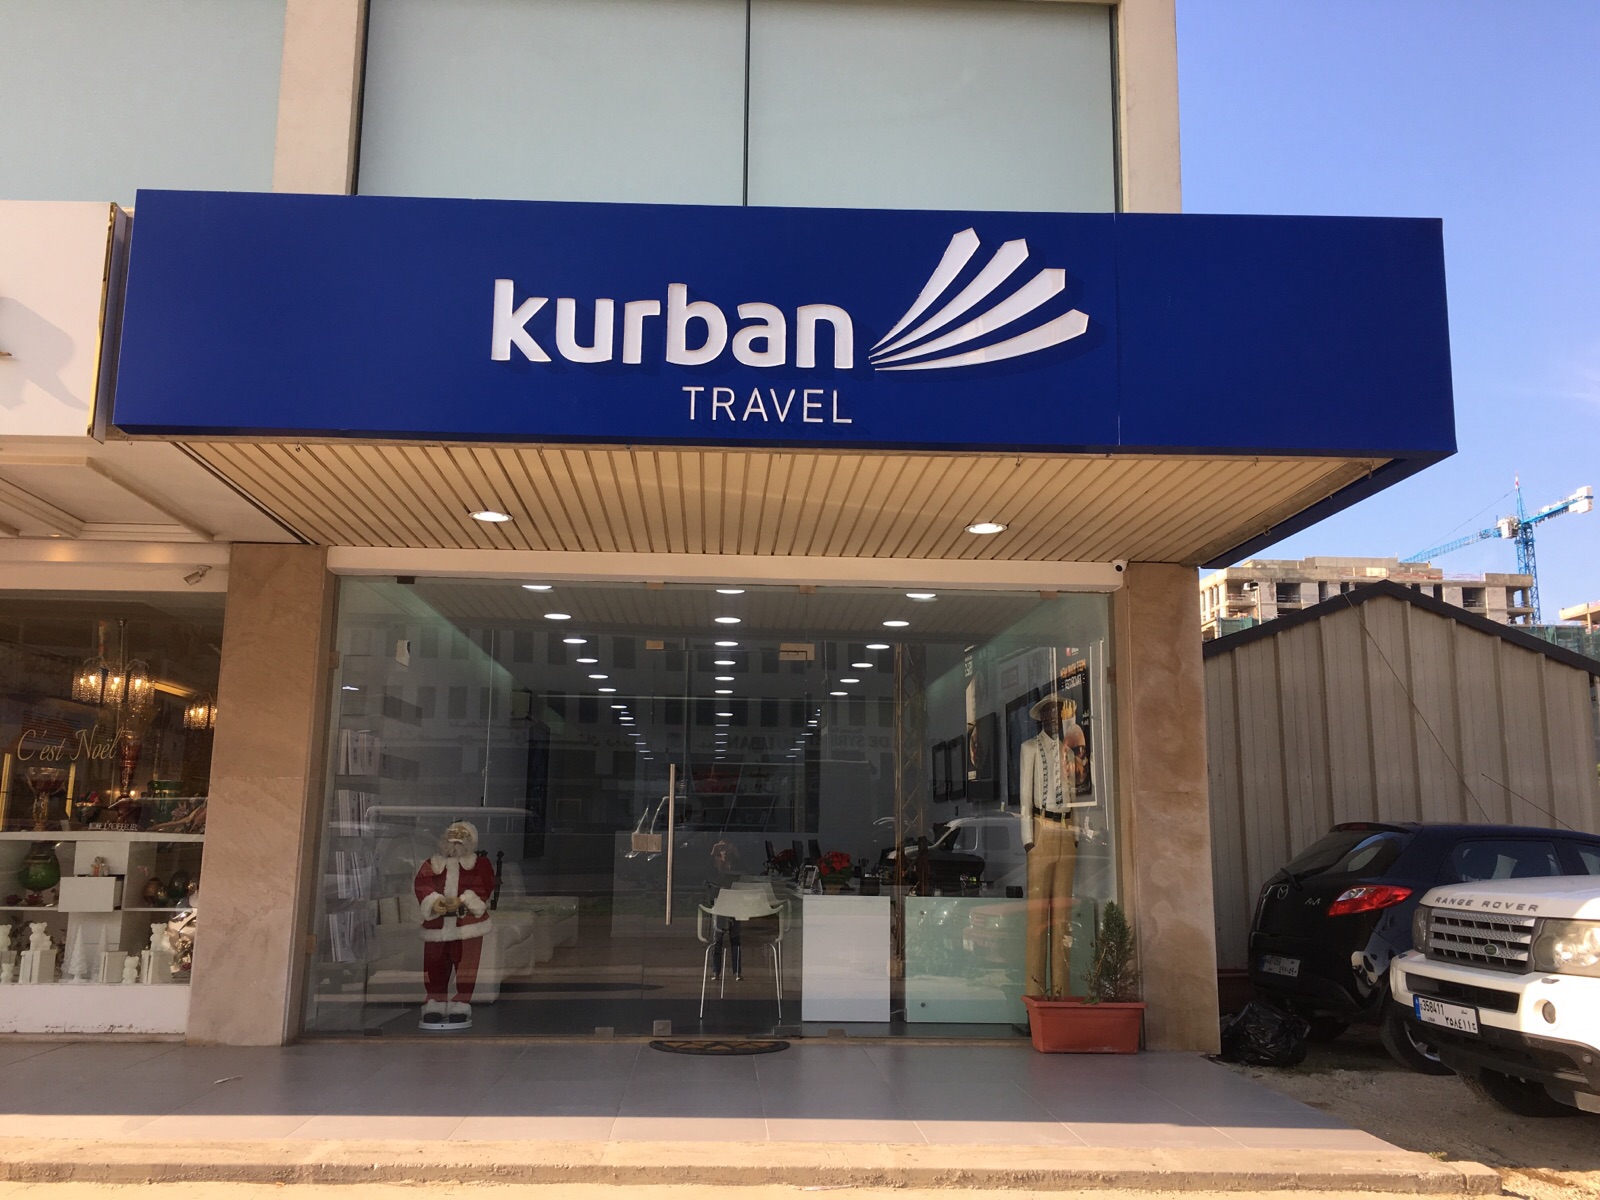 kurban travel services sarl